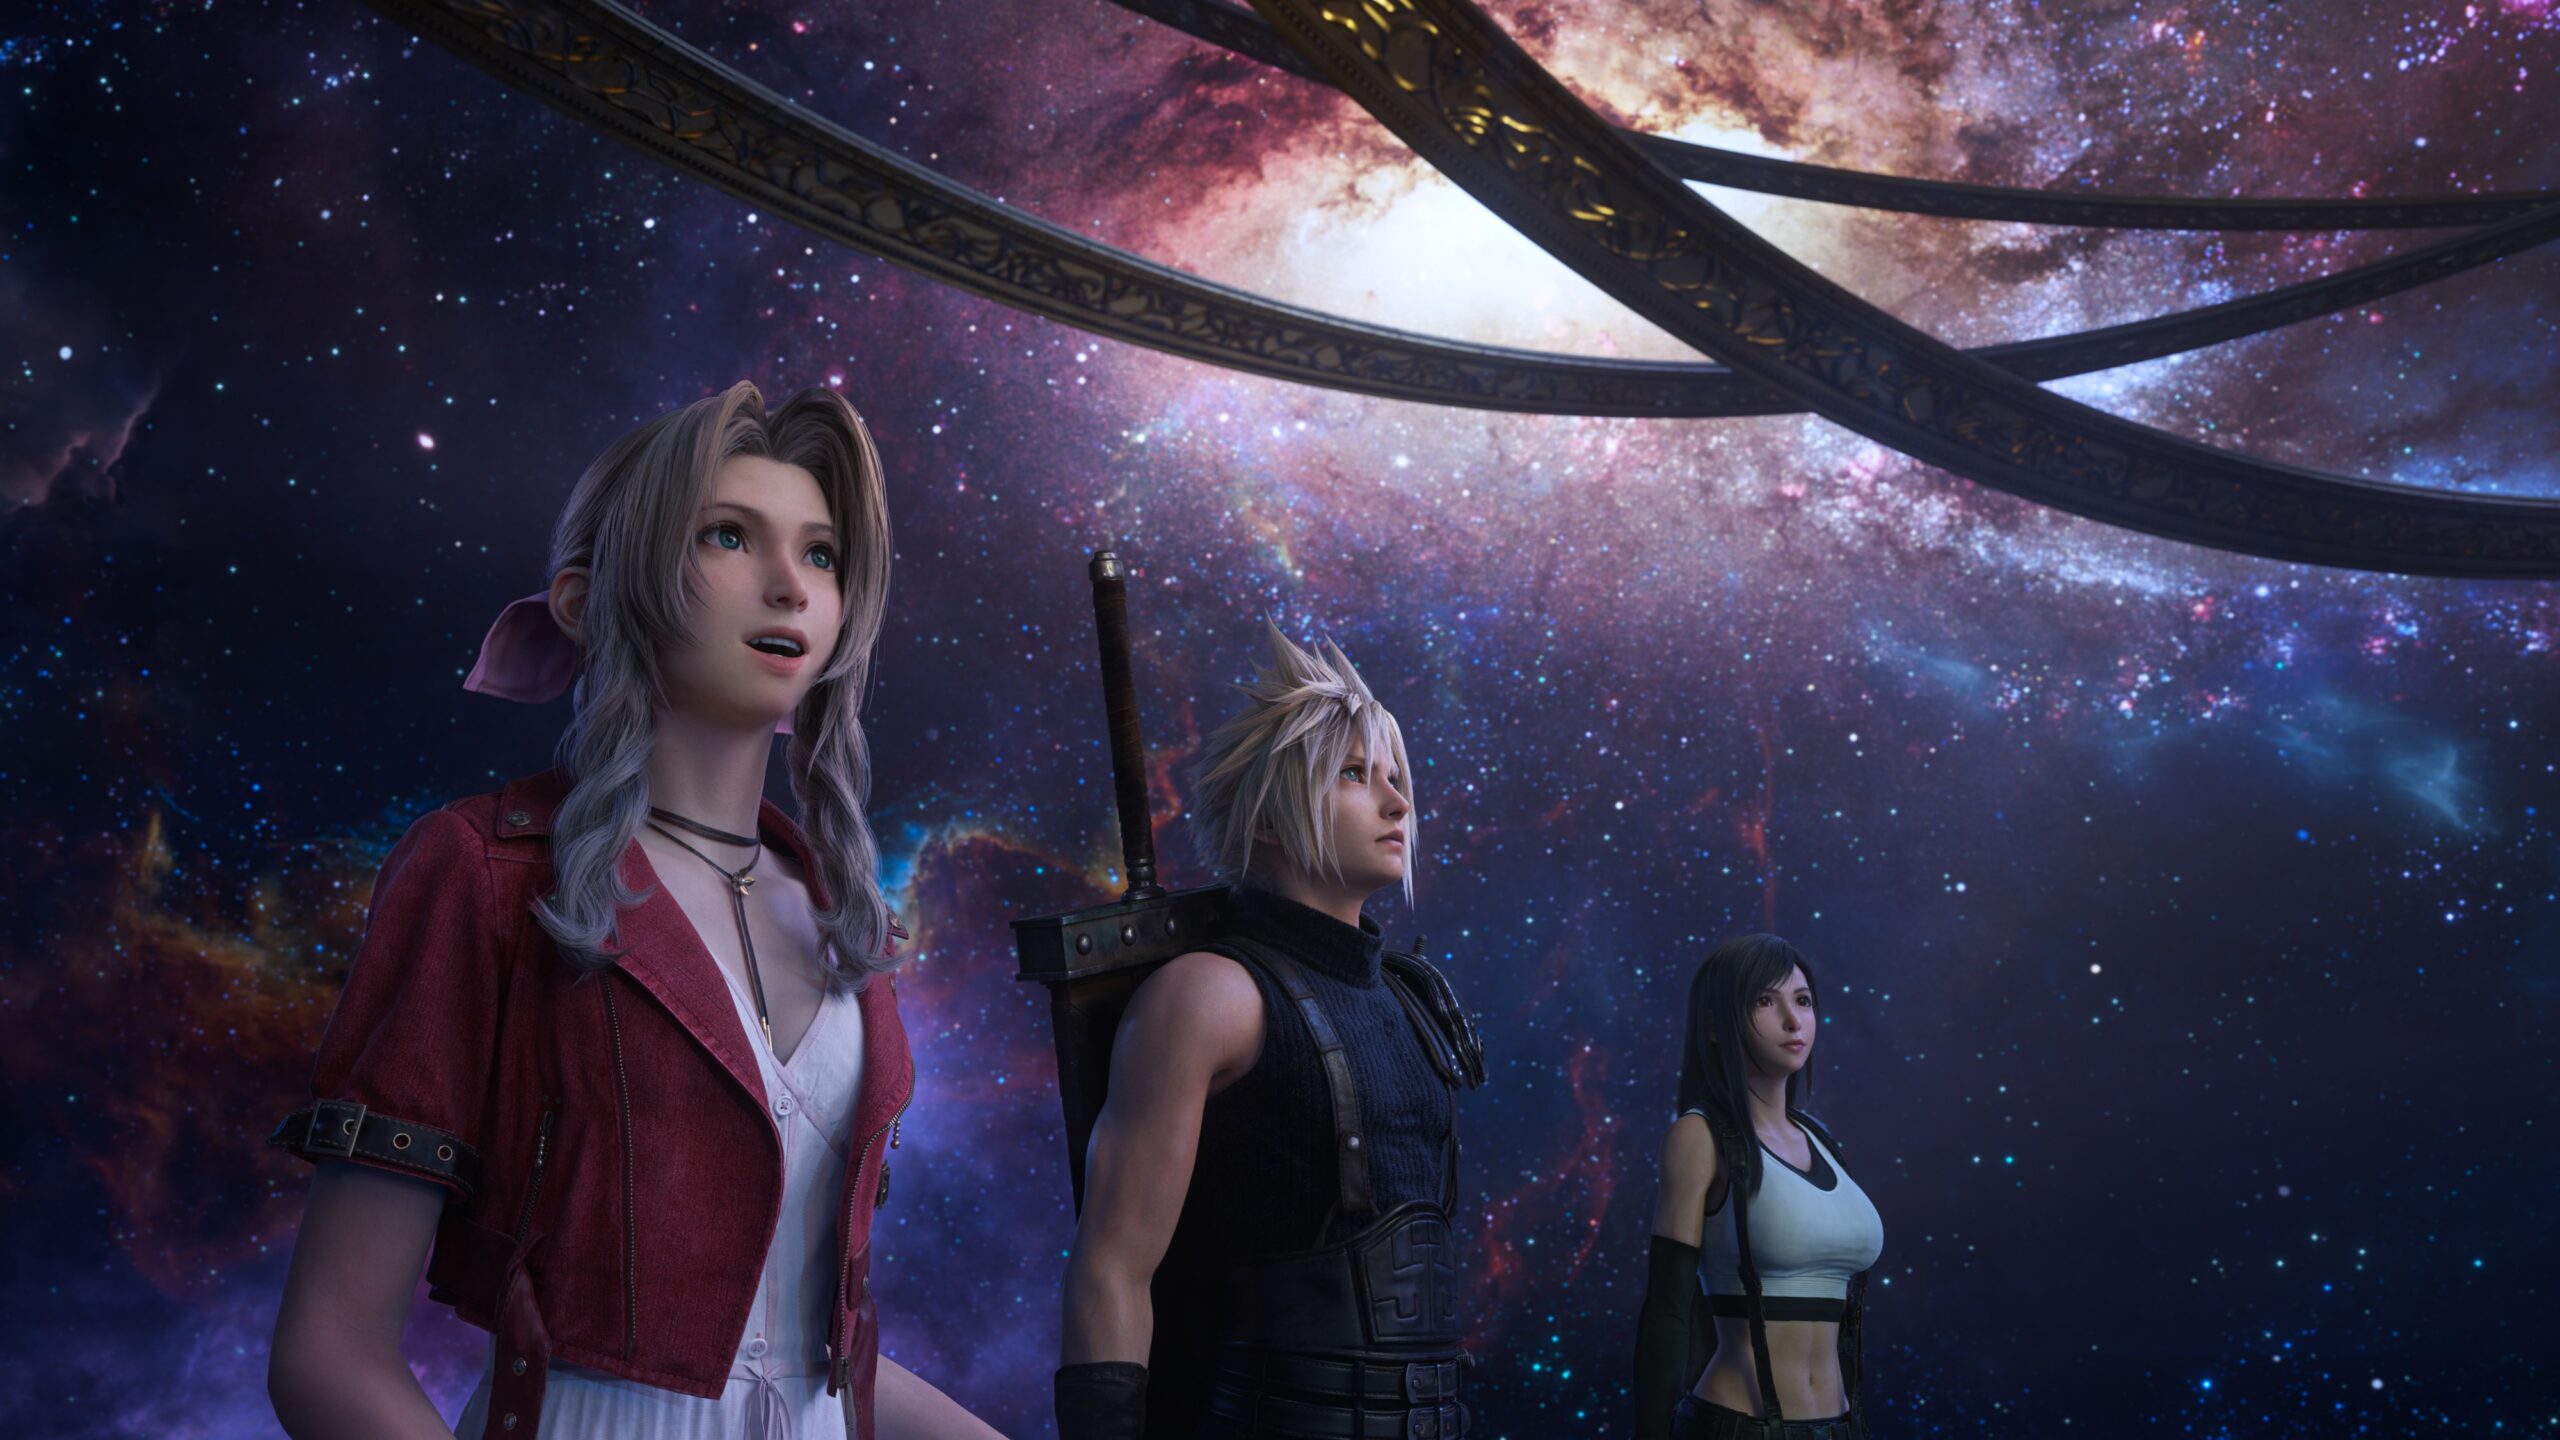 Final Fantasy 7 Remake: Intergrade' release date, trailer, plot, and more